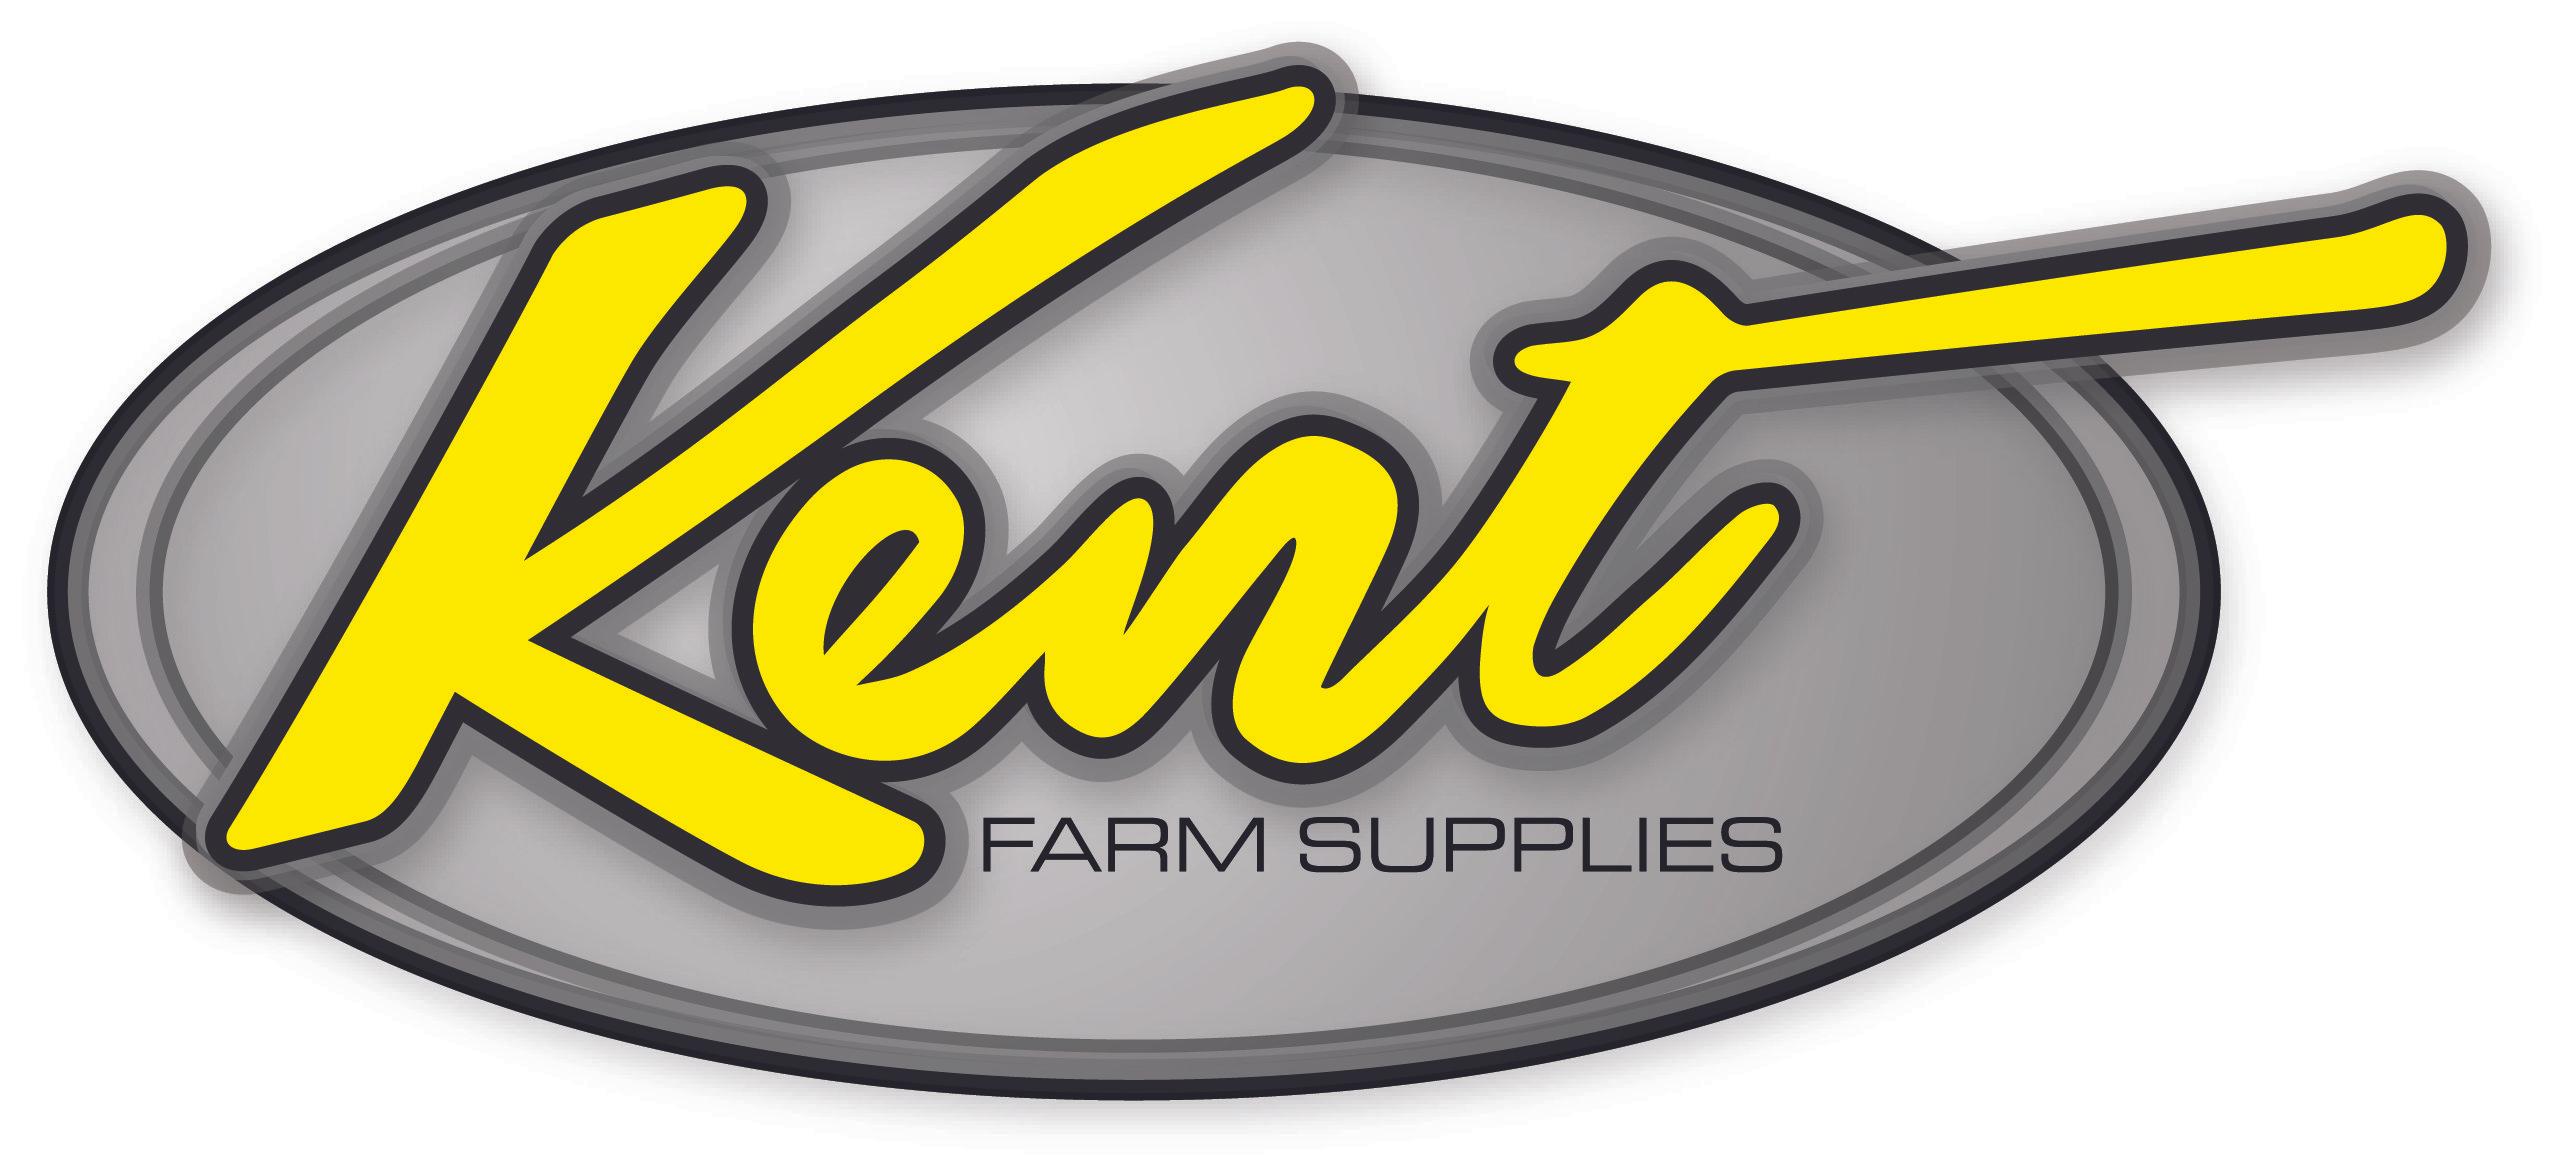 Kent Farm Supplies Limited